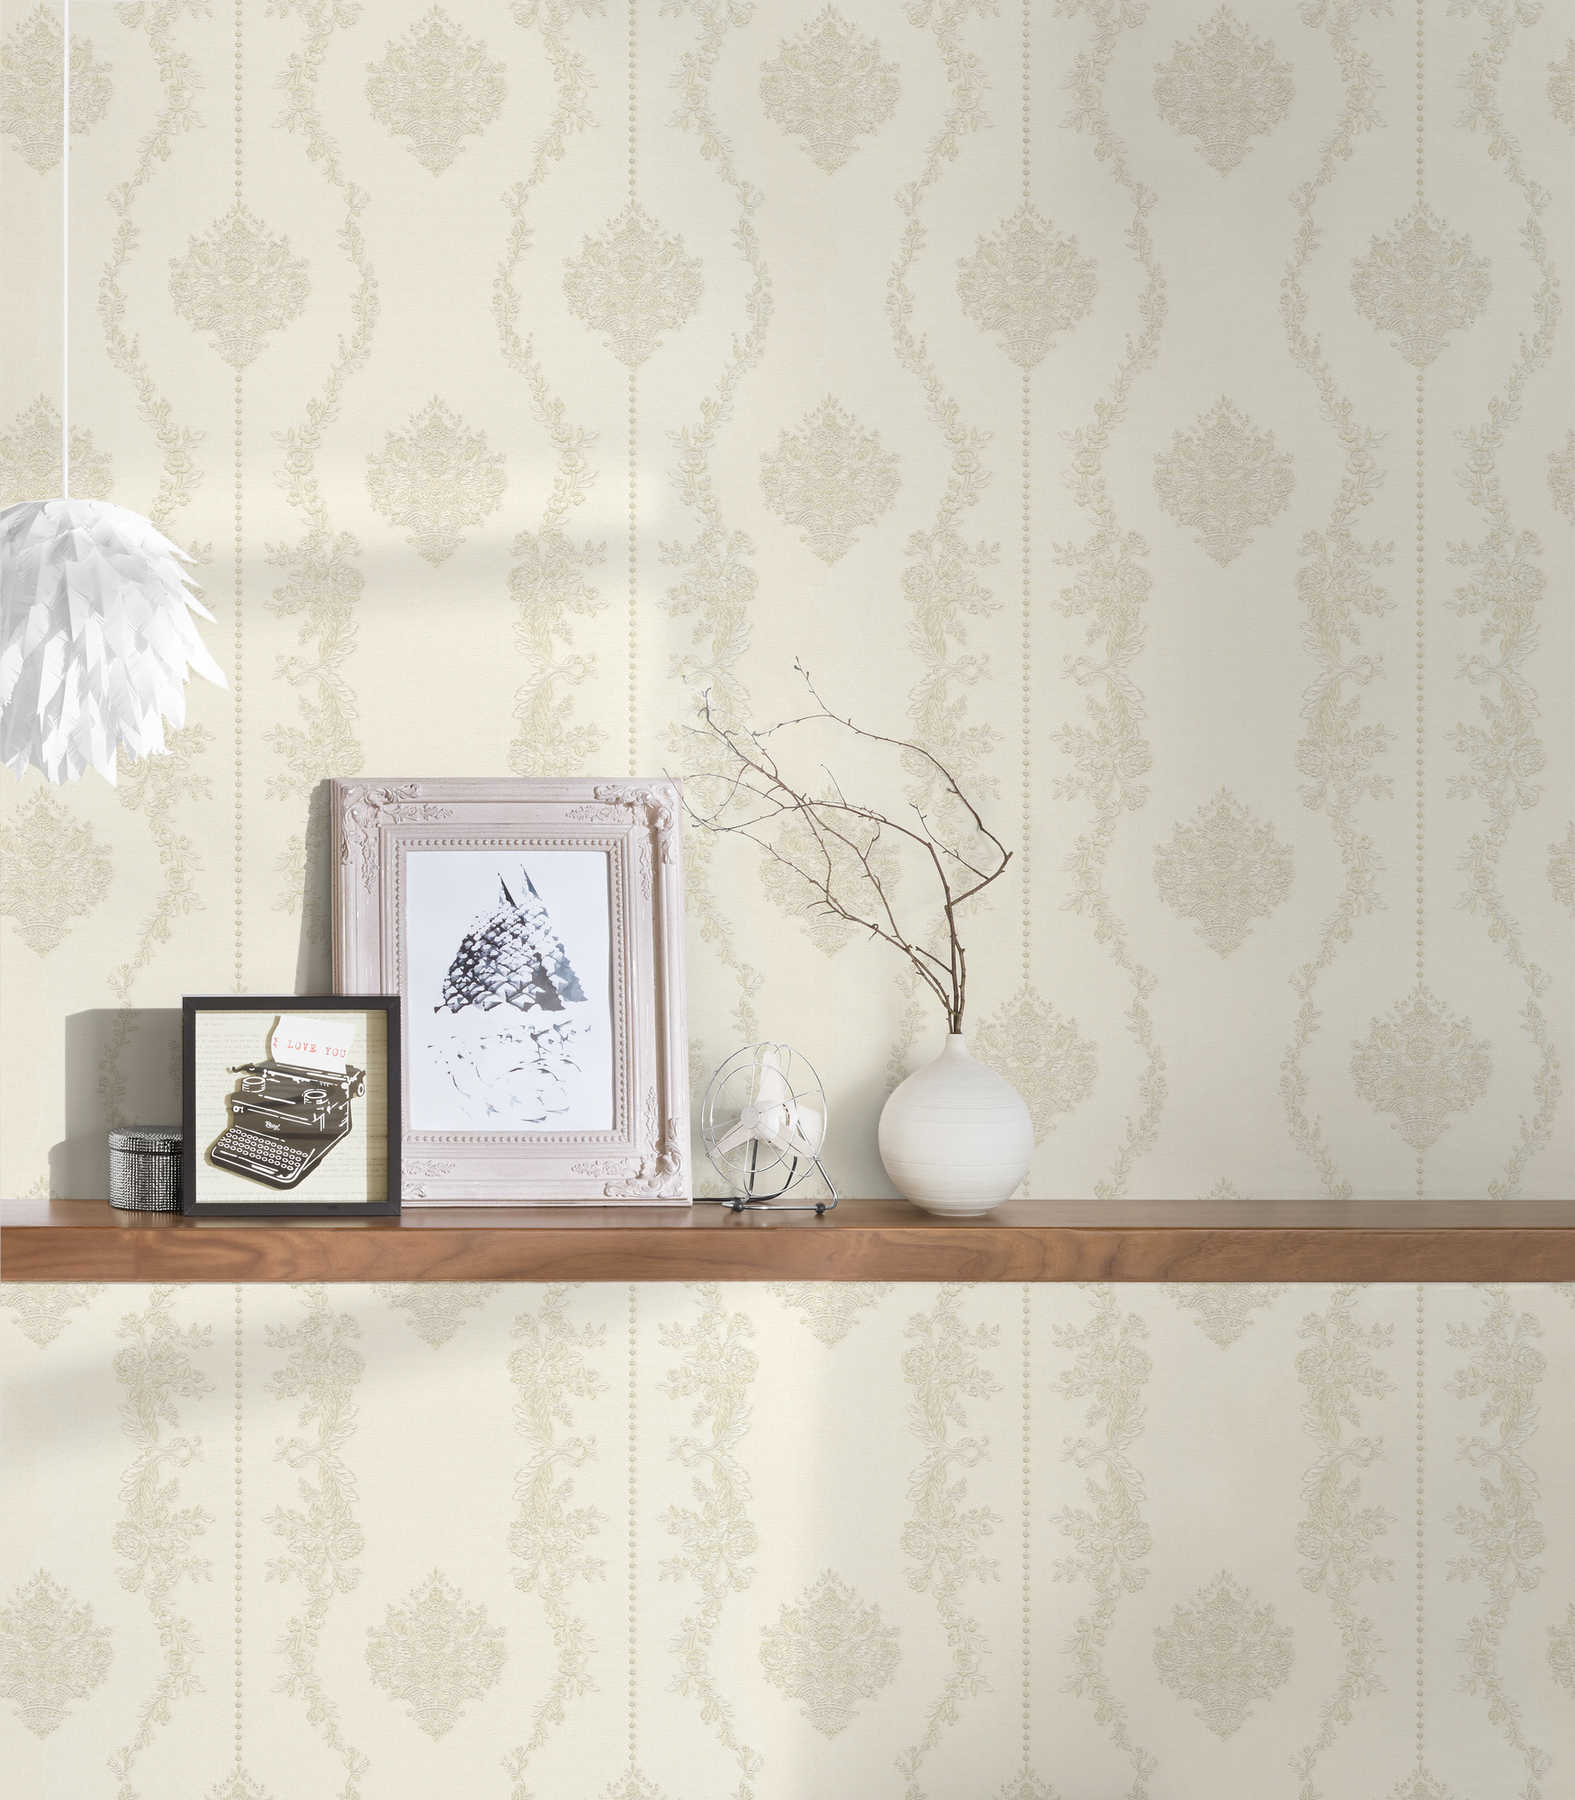             Luxury wallpaper ornaments & metallic effect - gold, white
        